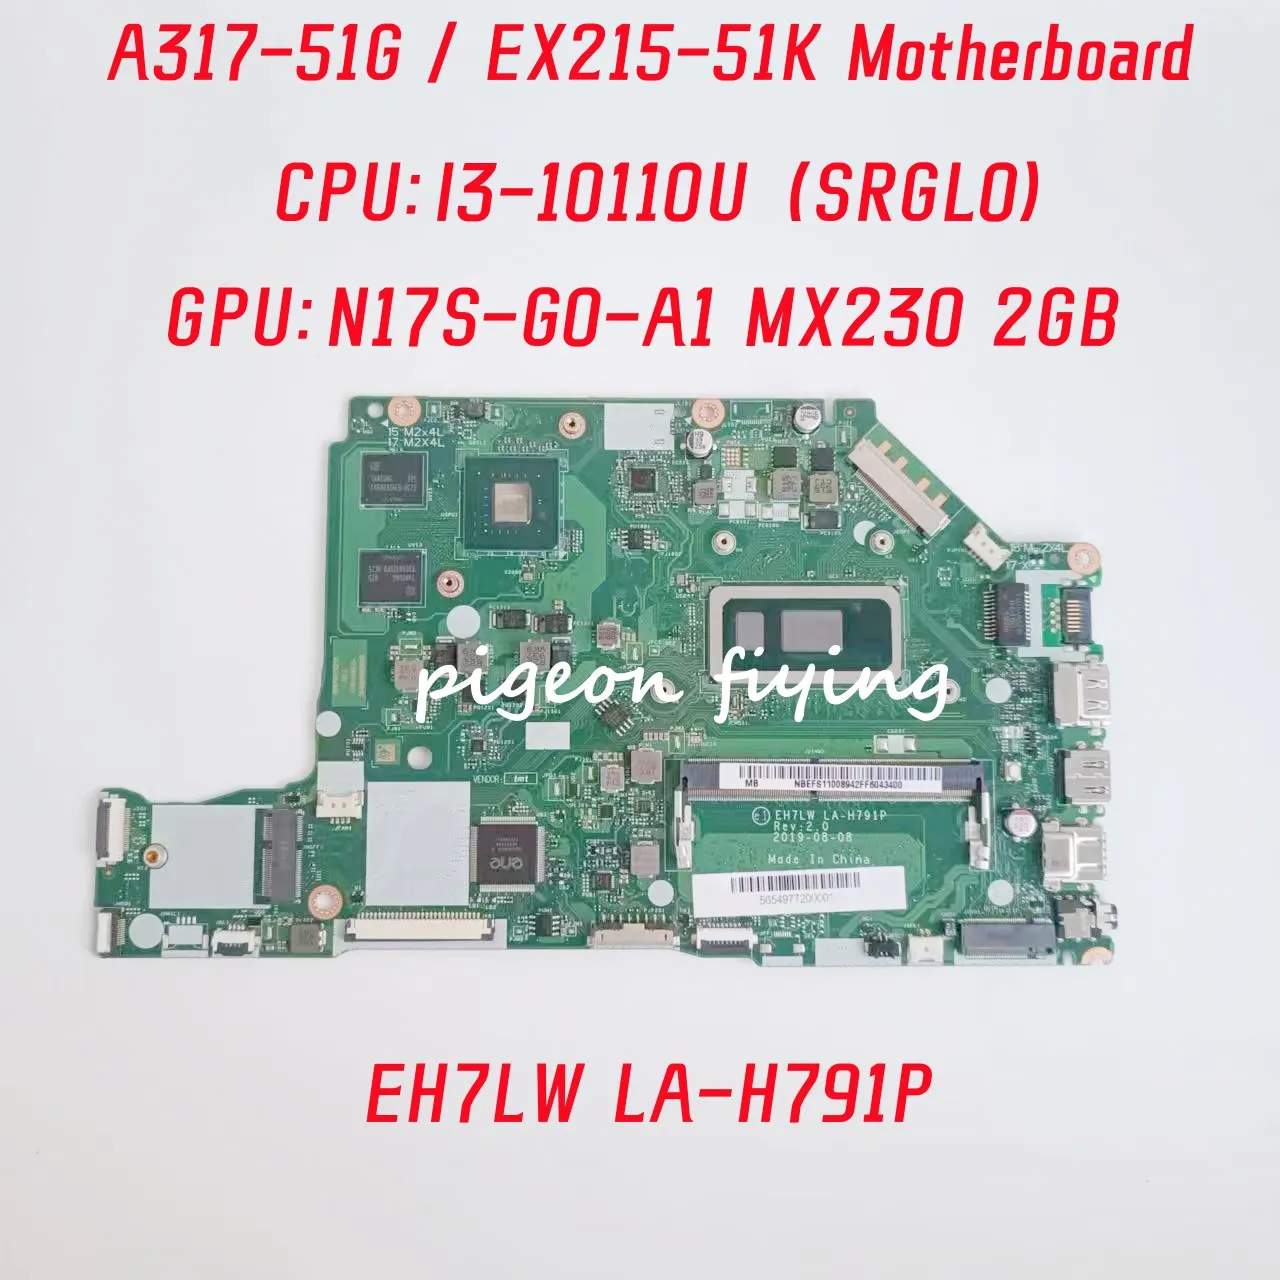 Материнская плата EH7LW LA-H791P для ноутбука Acer Aspire A317-516/EX215-51K Процессор: I3-10110U SRGL0 Графический процессор: MX230 2G 100% тест В порядке